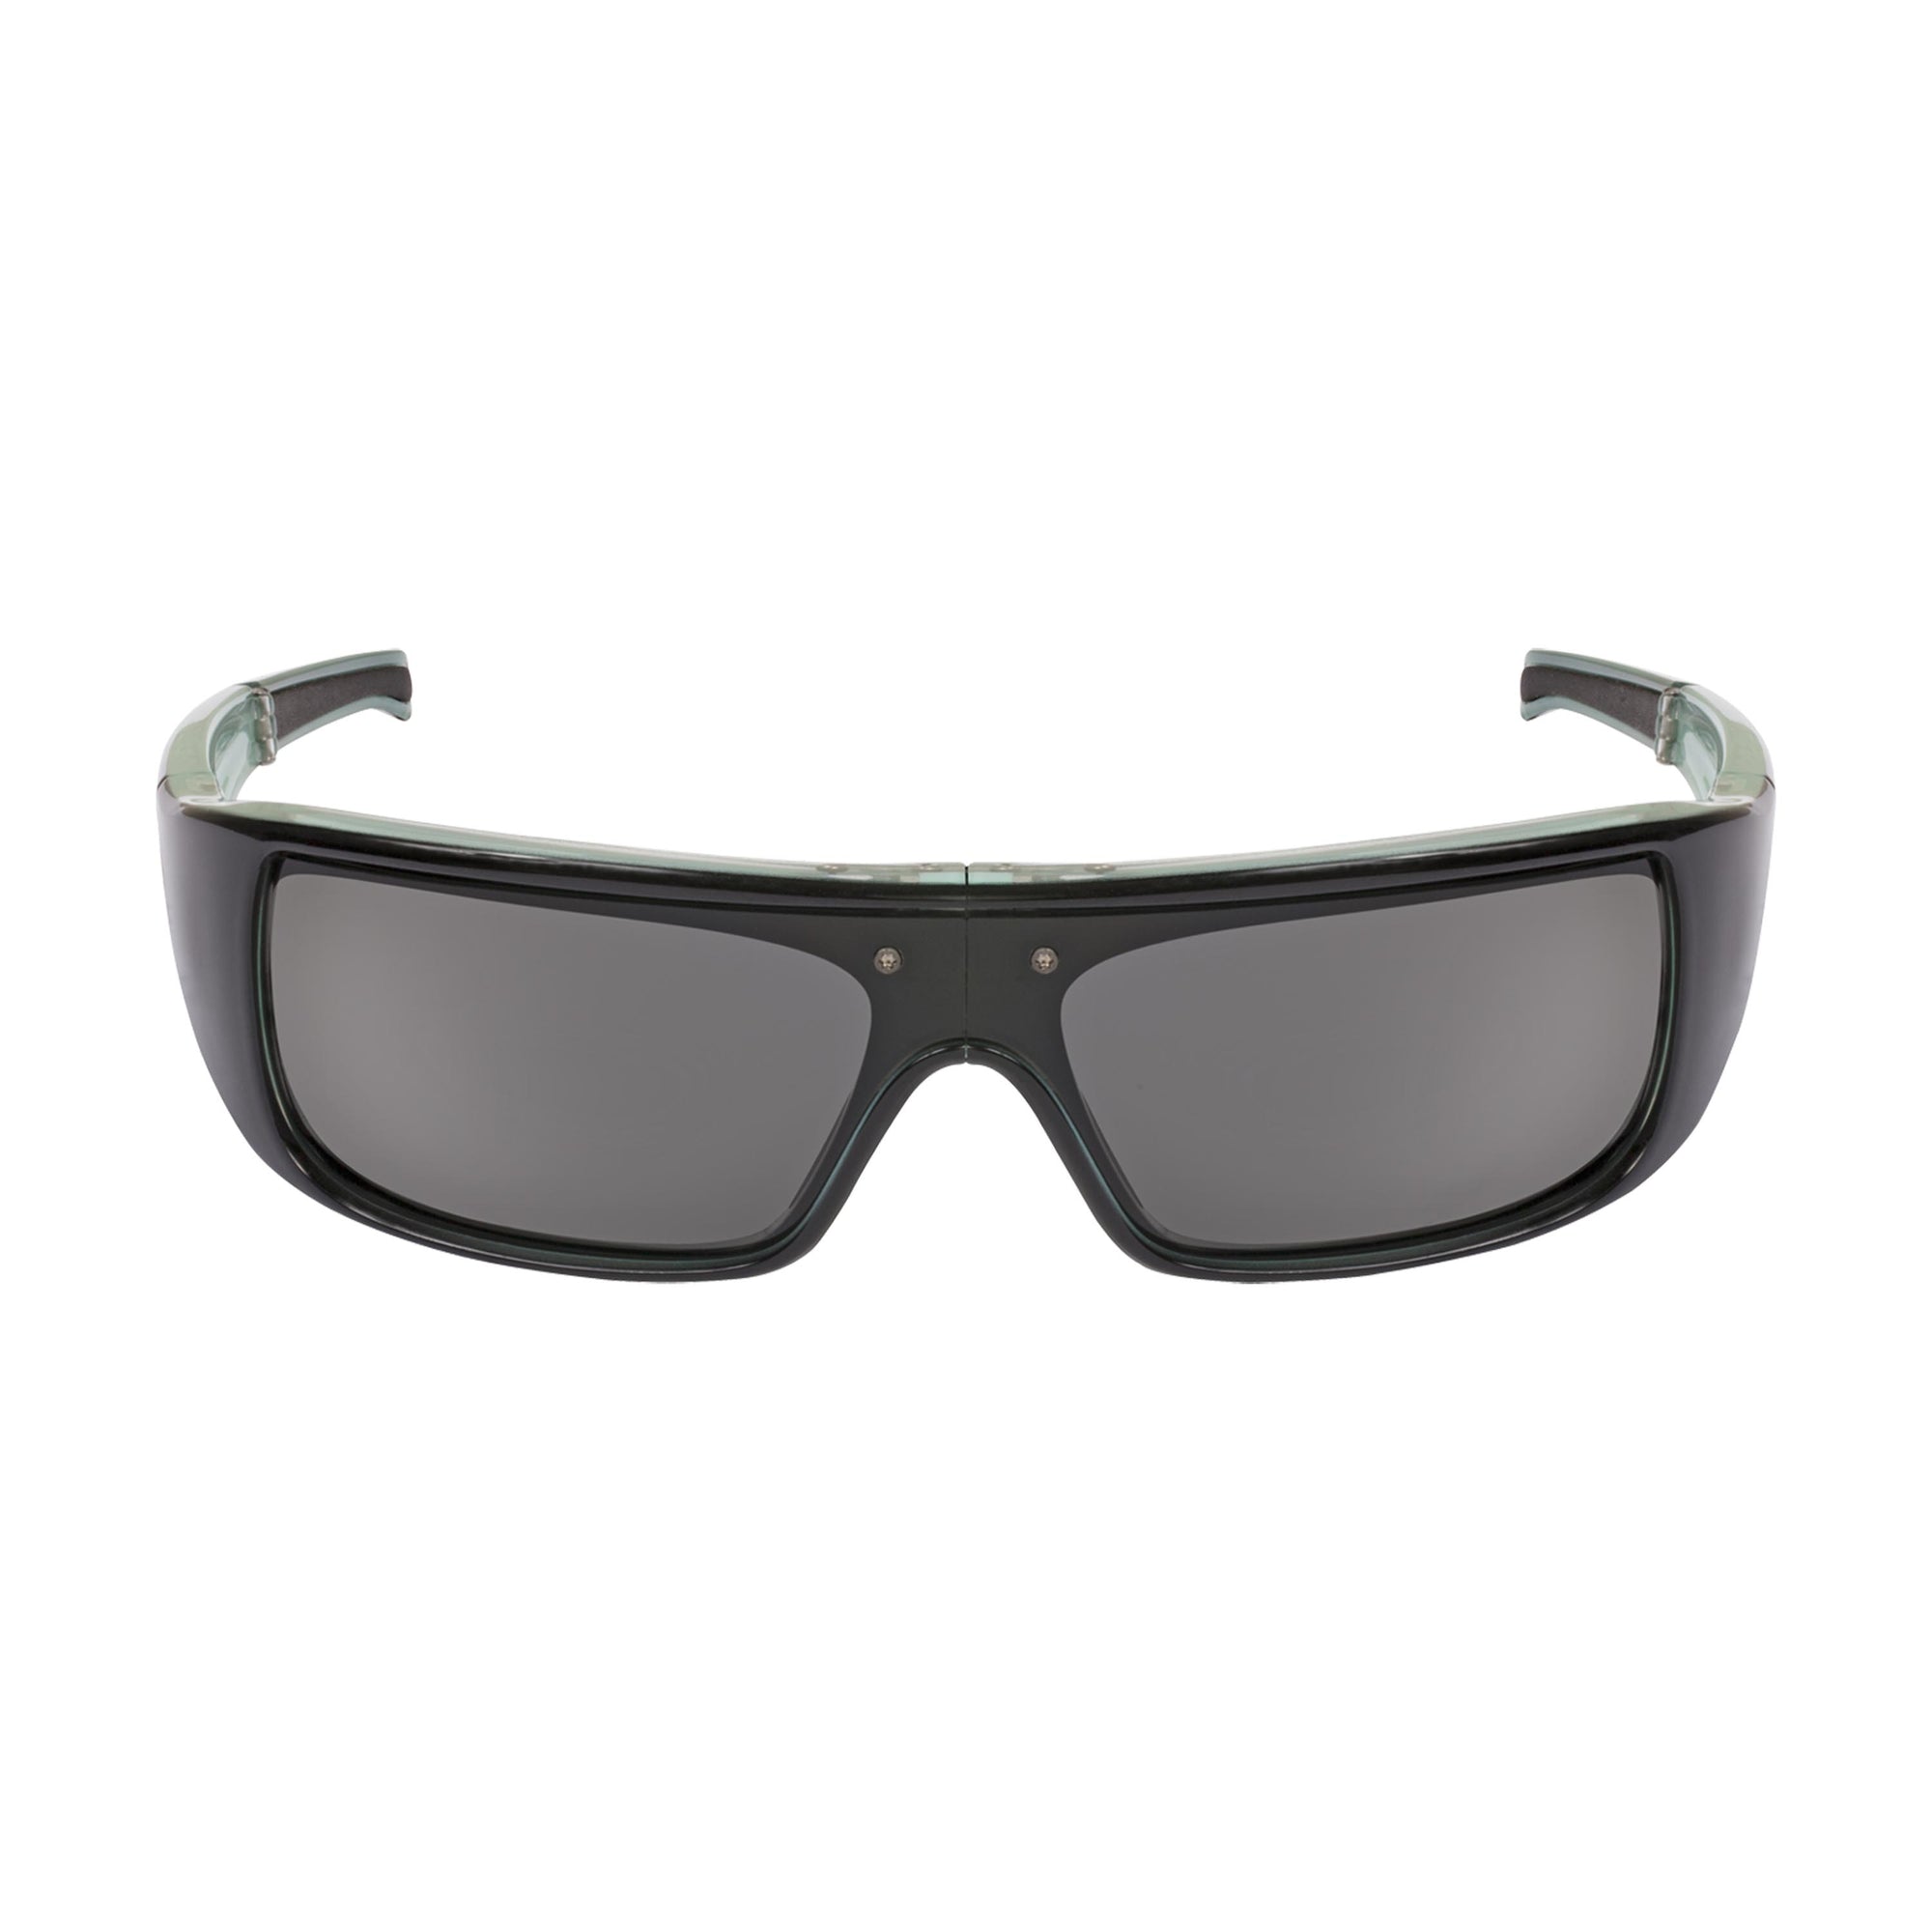 Popticals, Premium Compact Sunglasses, PopGear, 040051-ULGP, Polarized Sunglasses, Gloss Black over Blue Crystal Frame , Gray Lenses, Glam View